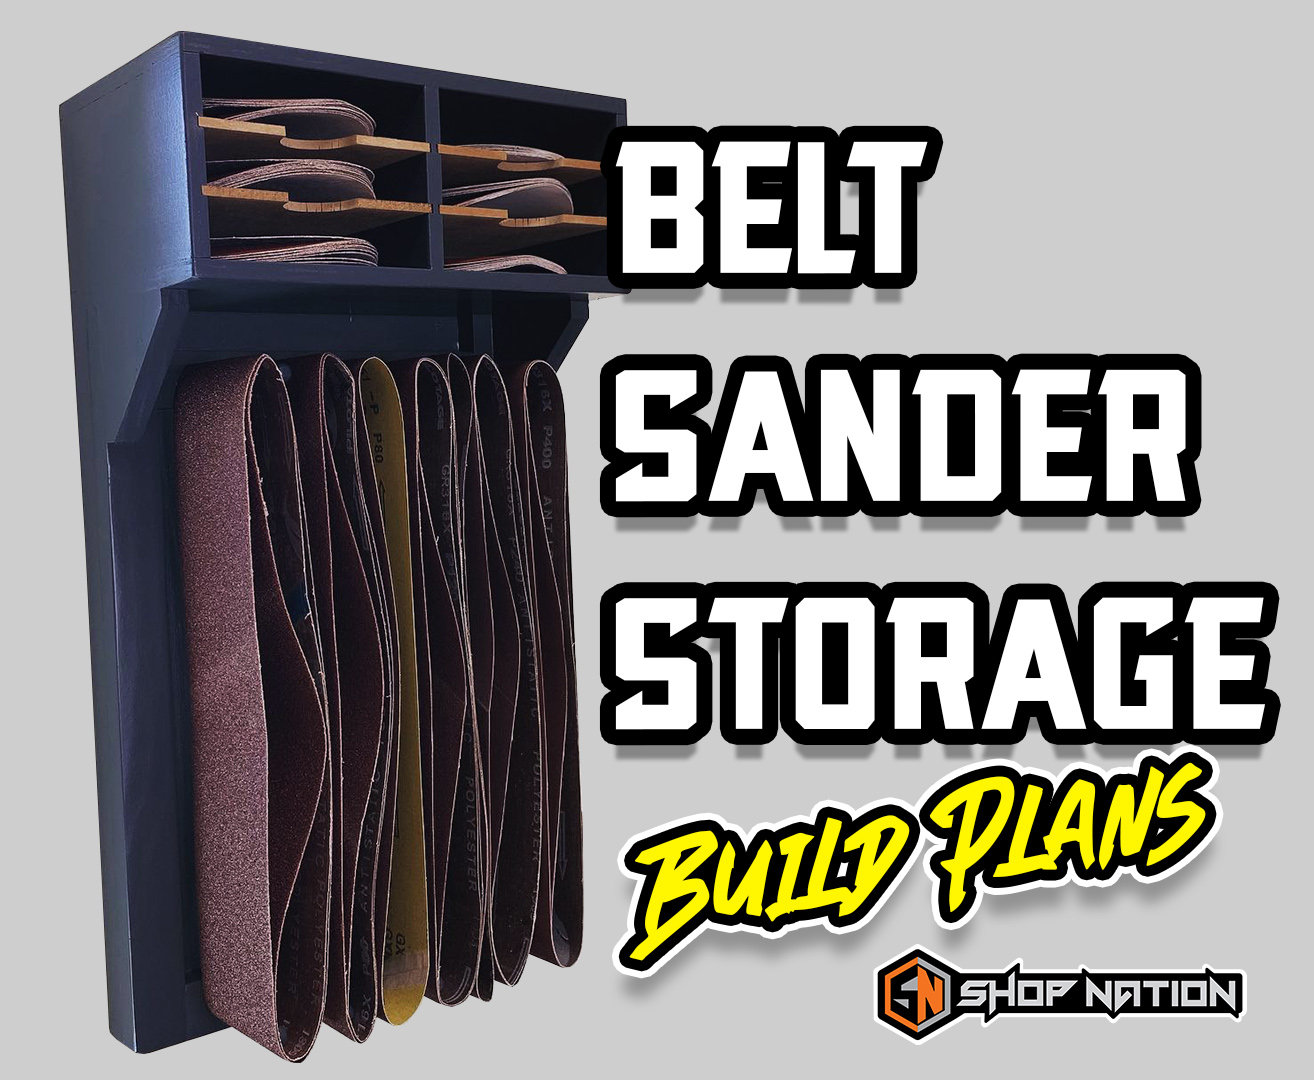 Sanding Disc Storage Cabinet